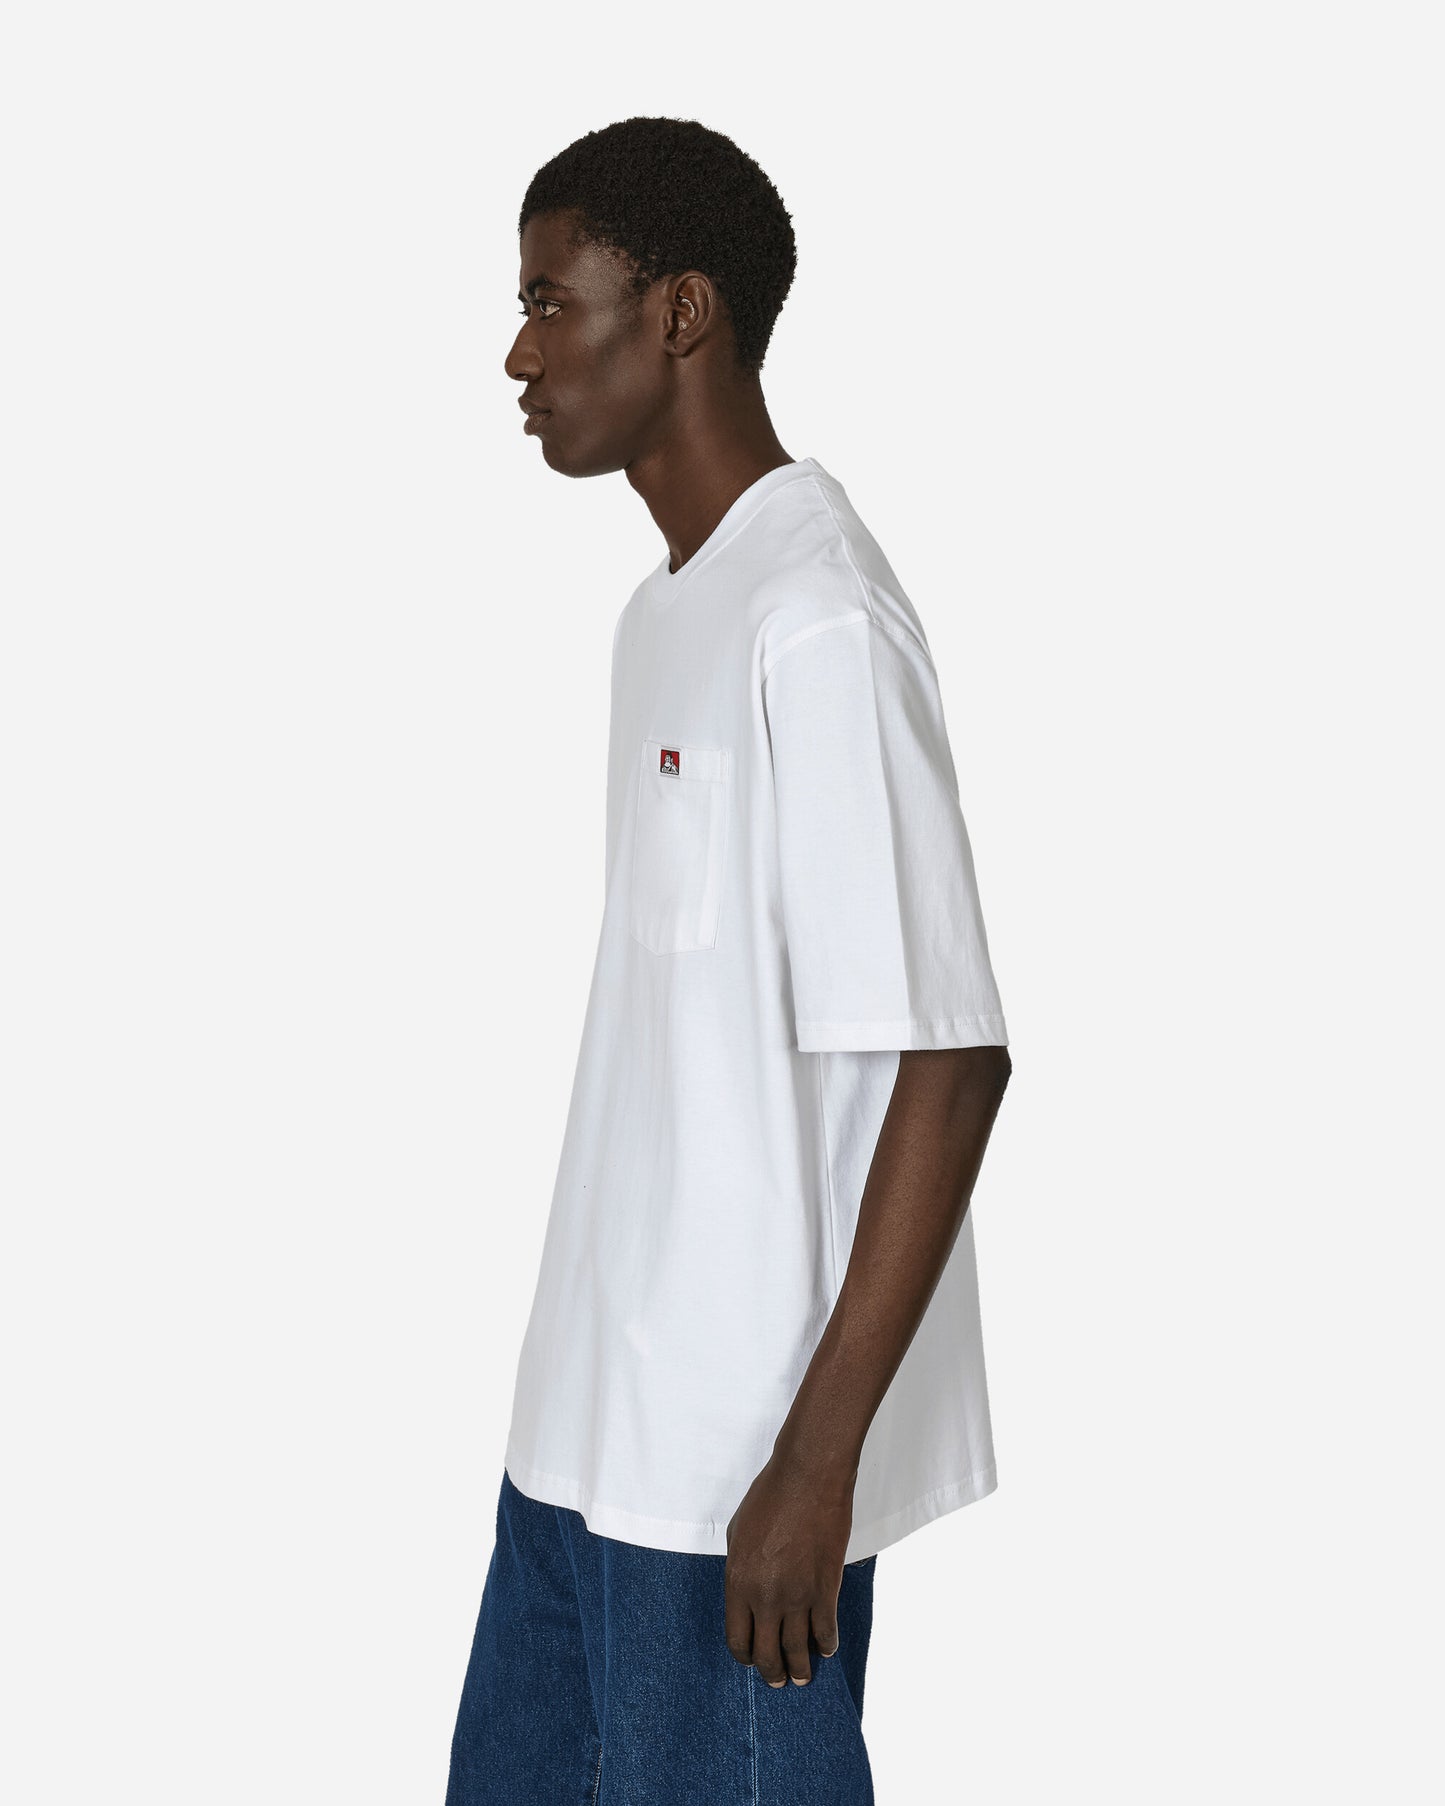 Ben Davis Classic Label Ss Pkt T-Heavyduty White T-Shirts Shortsleeve BEN910 001